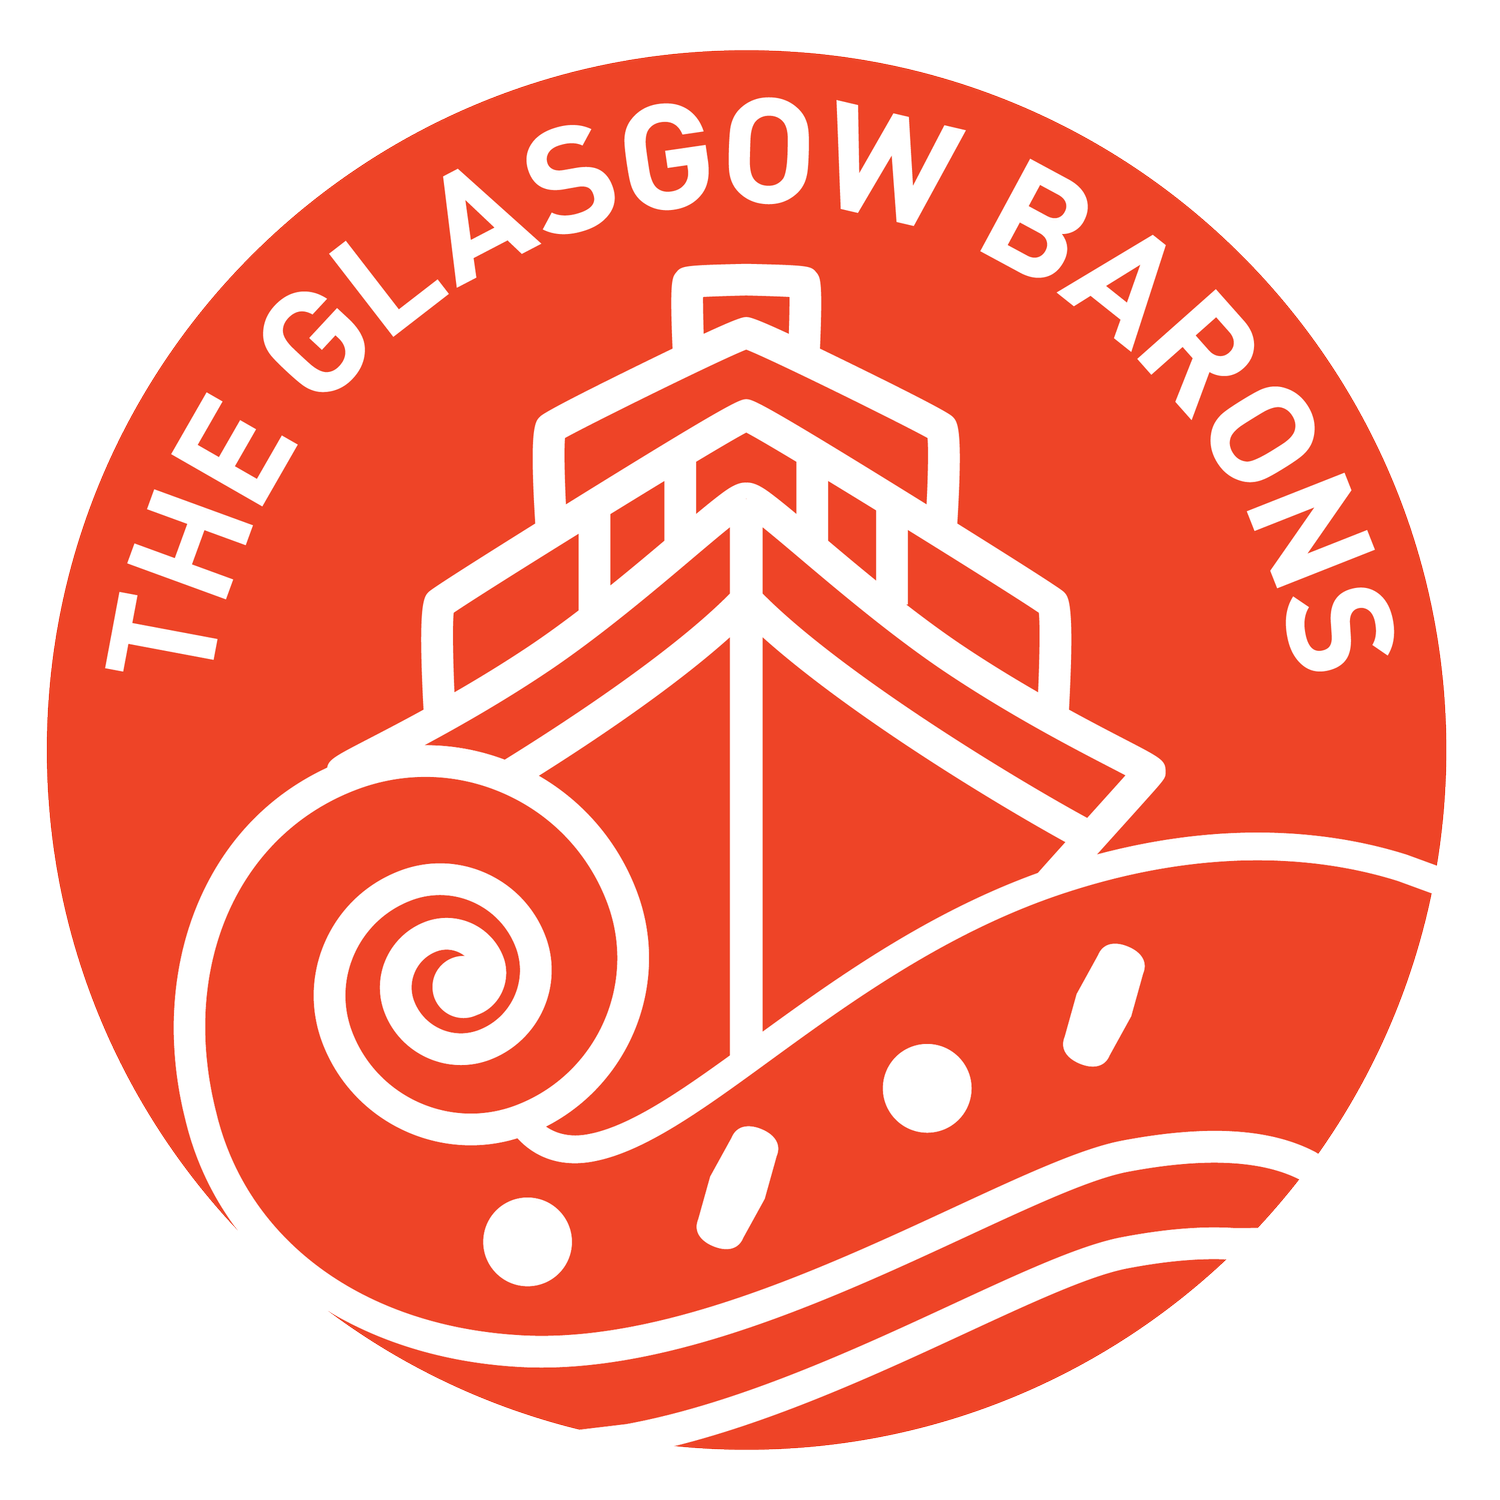 The Glasgow Barons